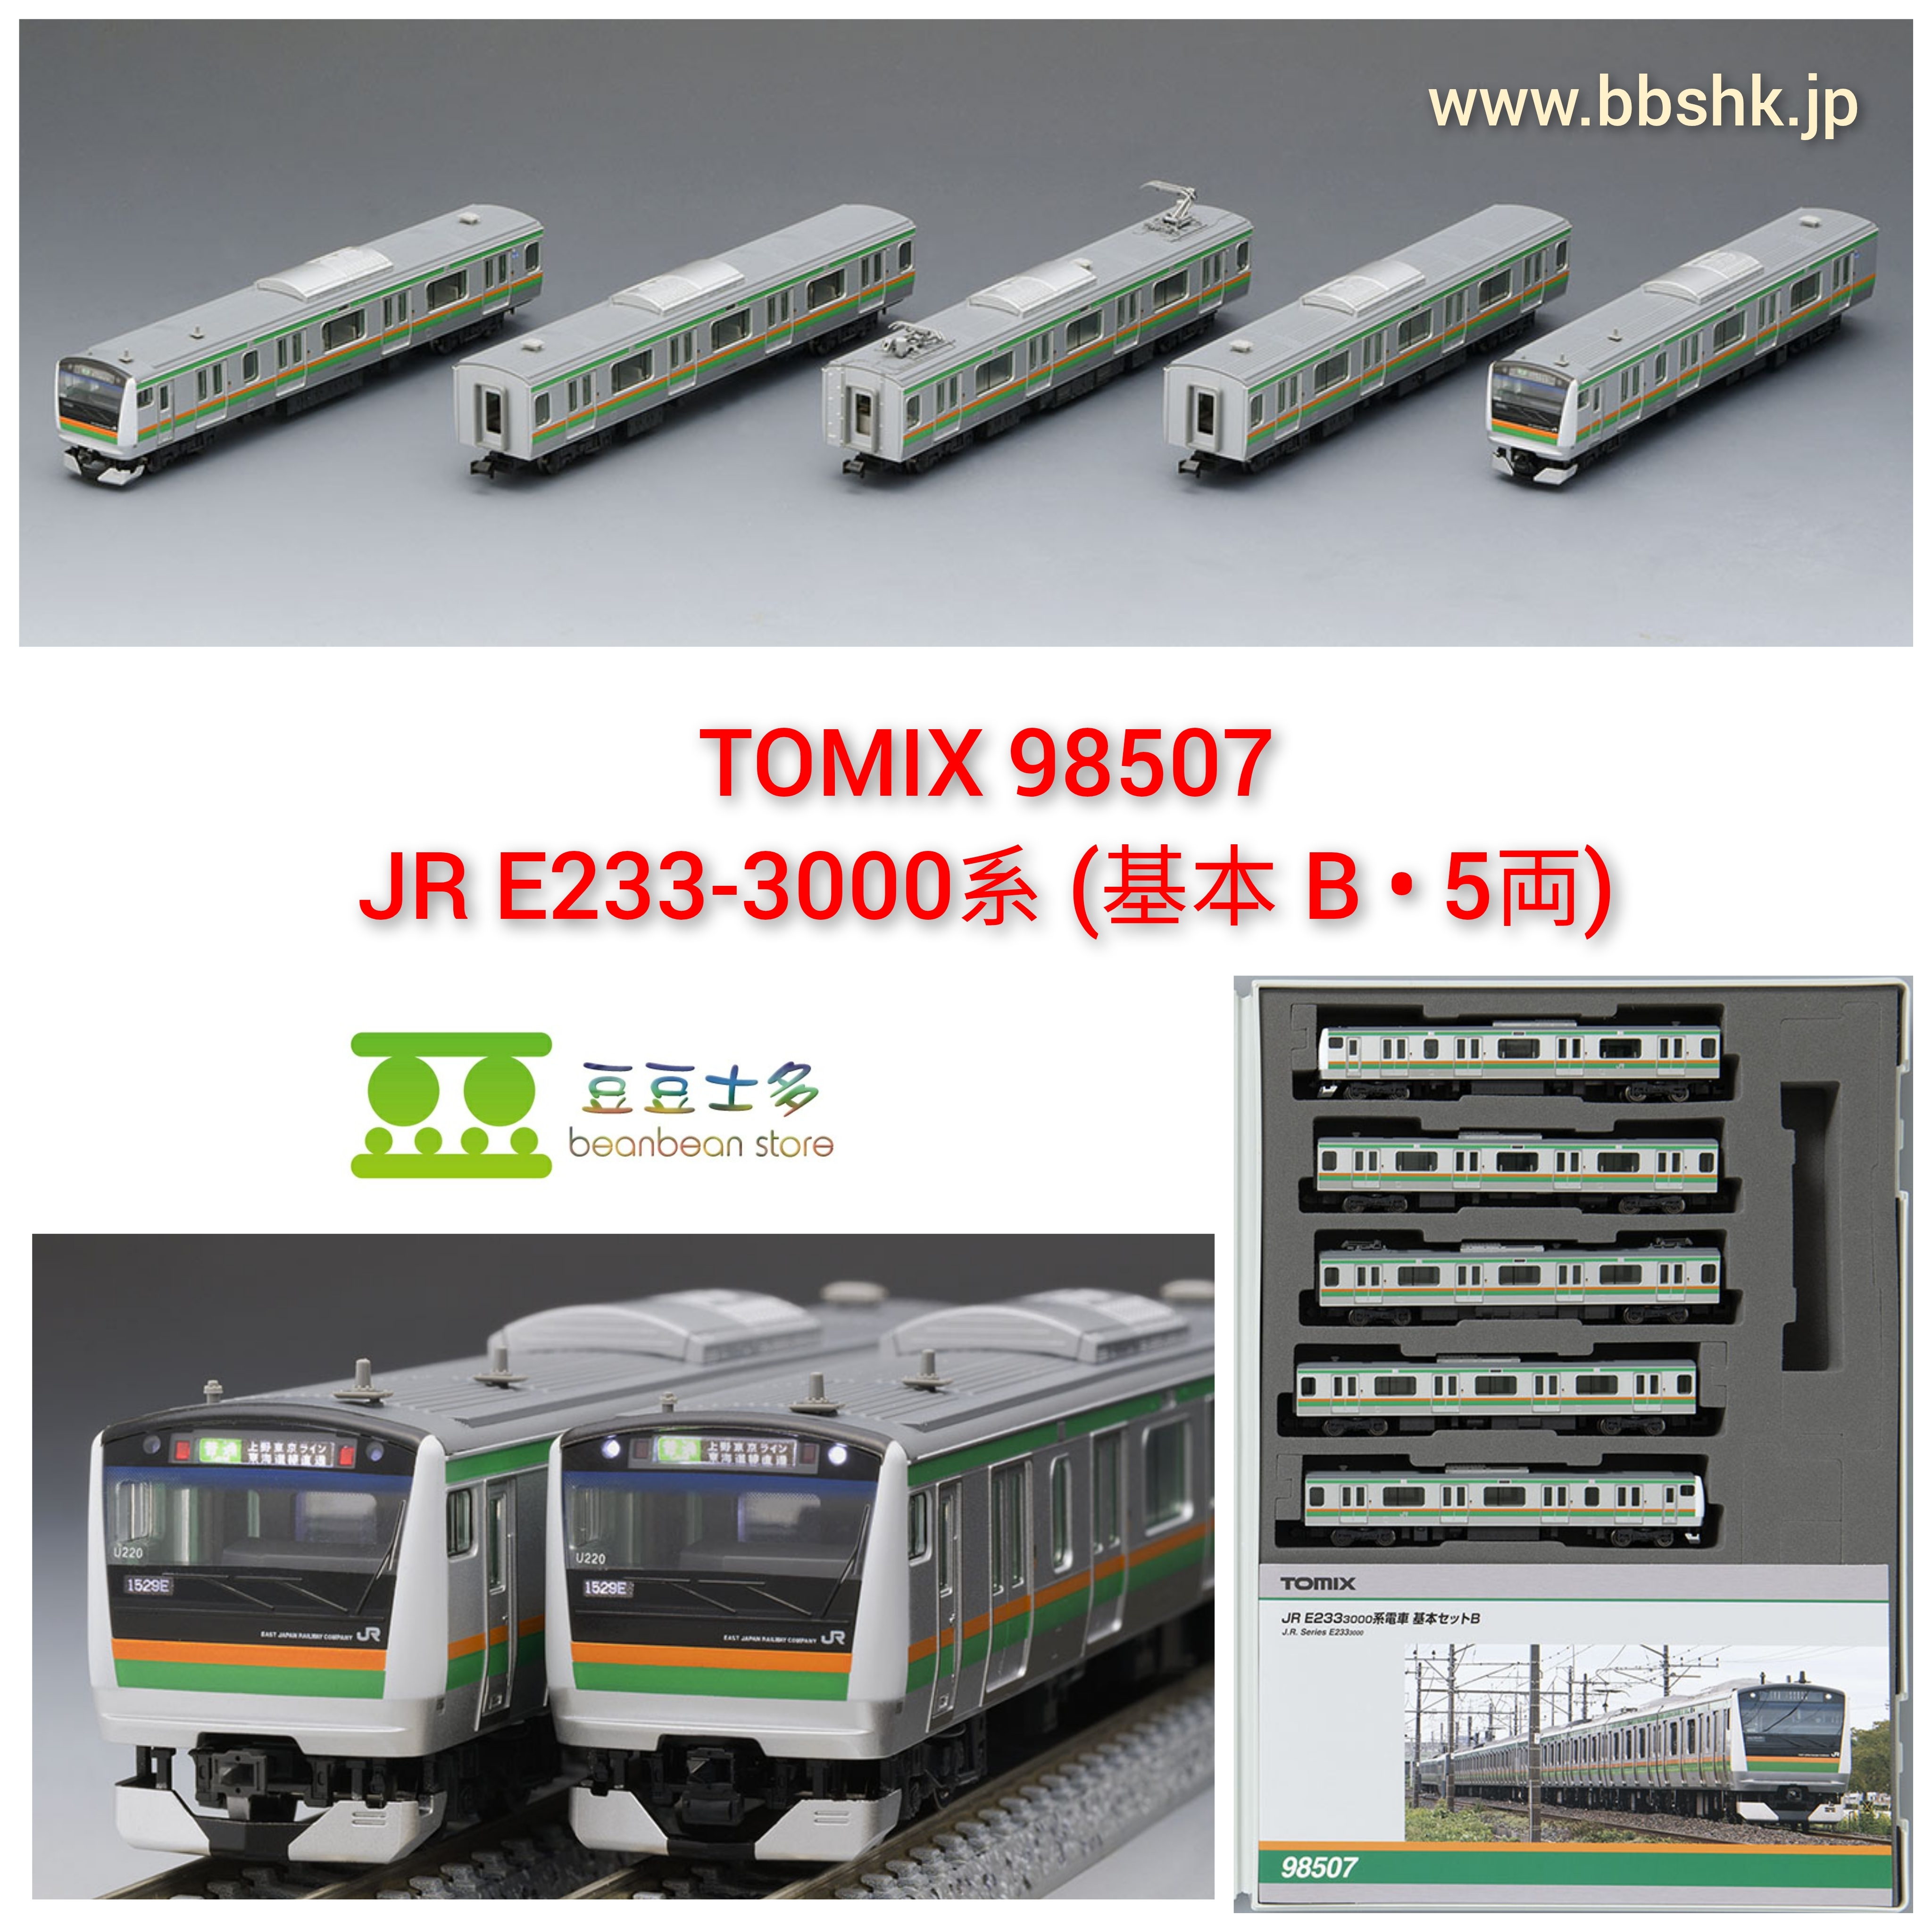 TOMIX 98507 JR E233-3000系電車(基本B・5両)